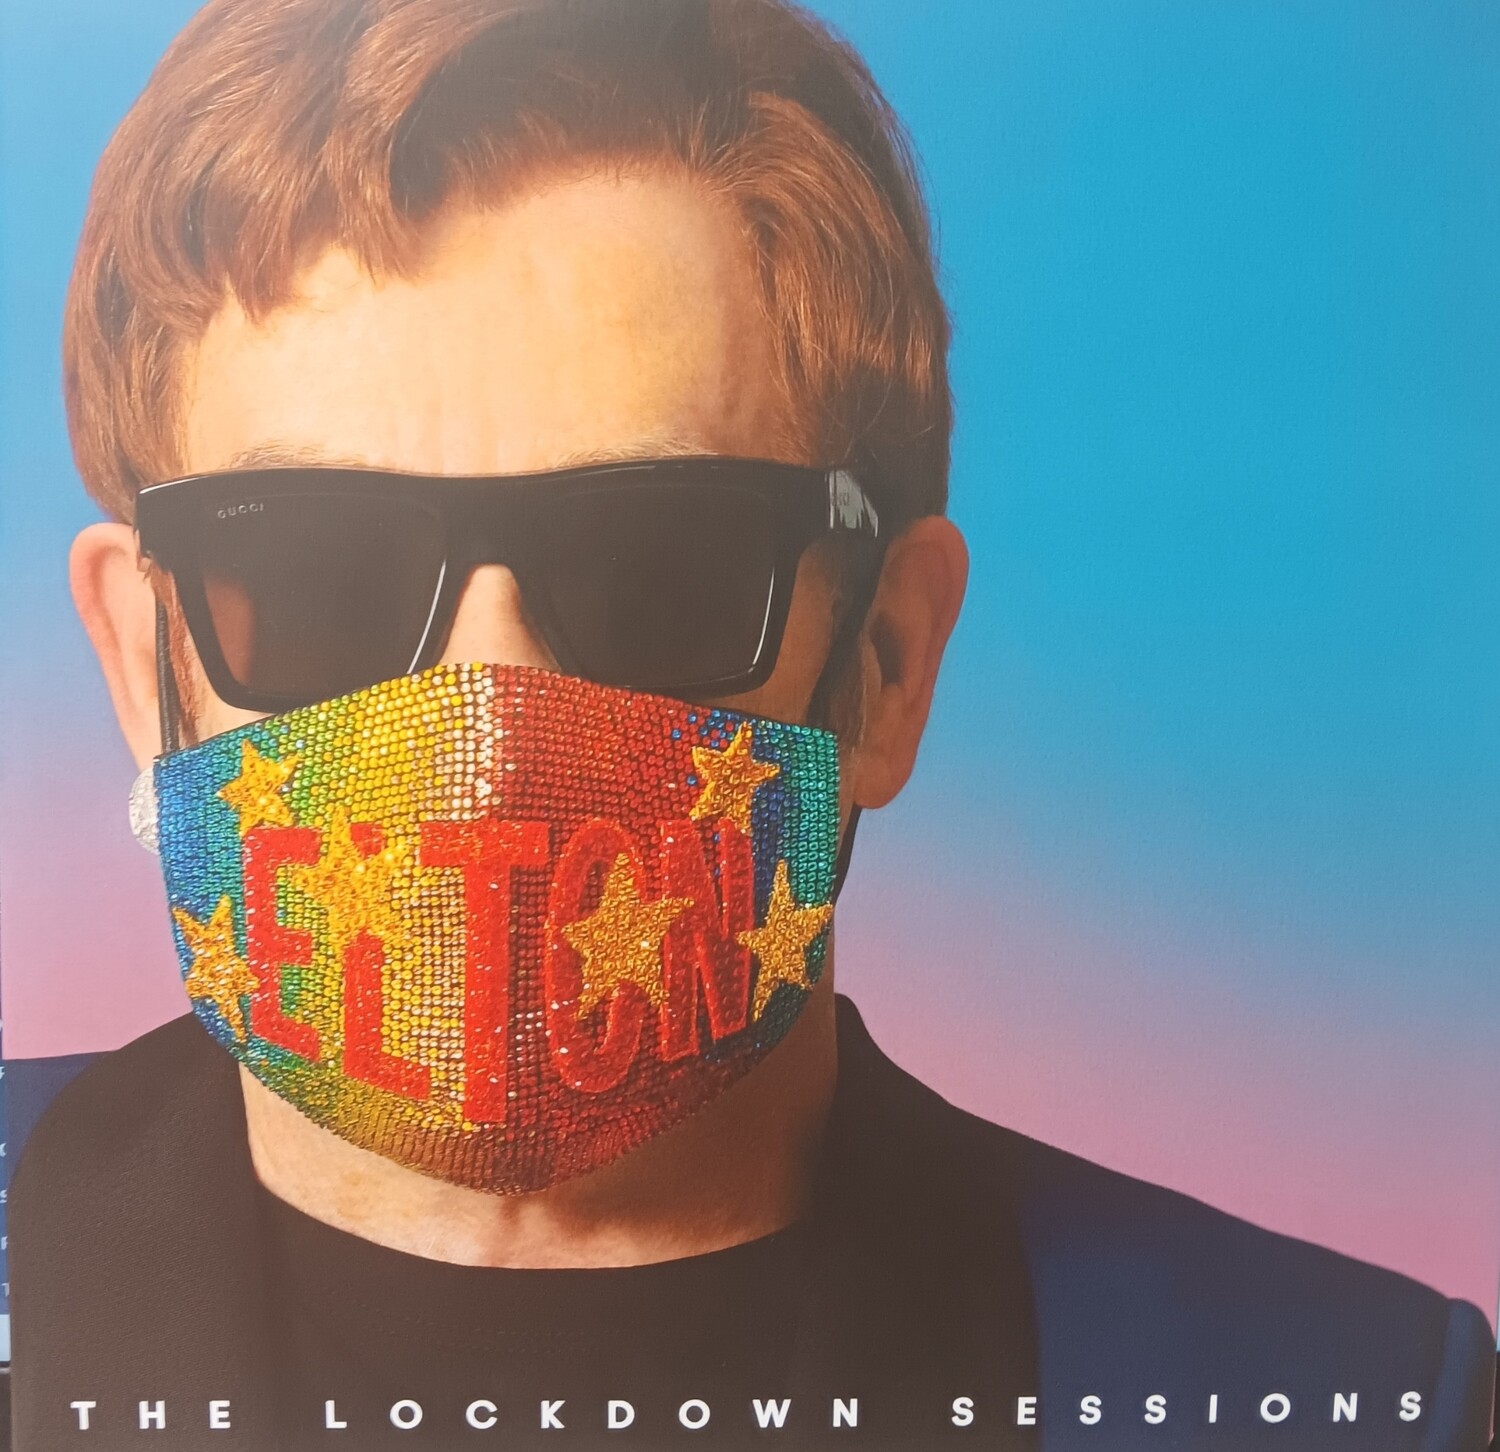 ELTON JOHN - The lockdown sessions